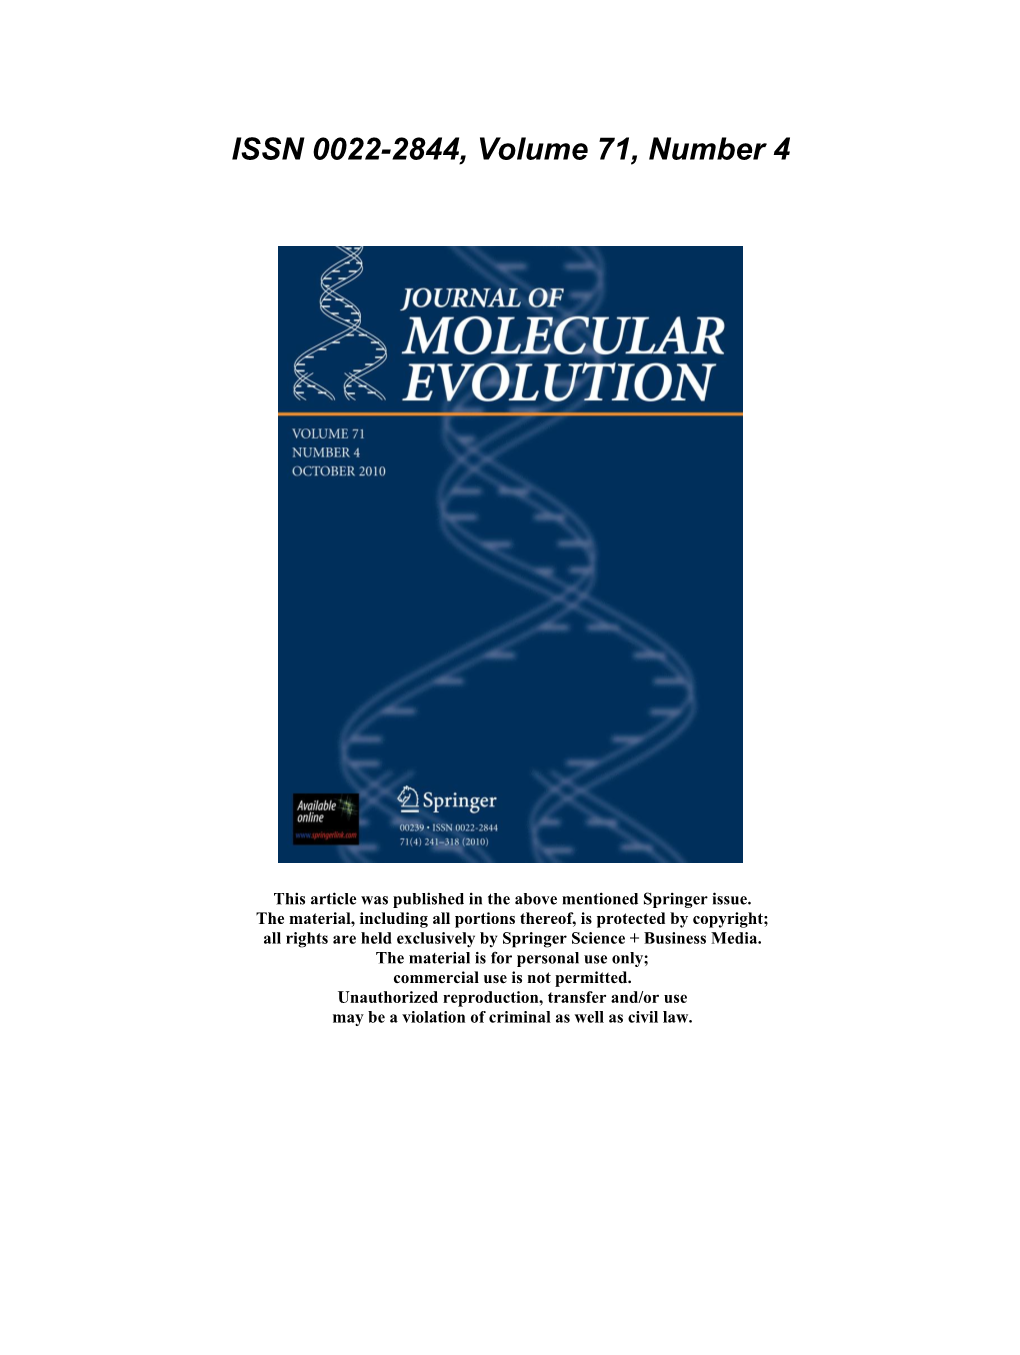 AVPR1A Sequence Variation in Monogamous Owl Monkeys (Aotus Azarai) and Its Implications for the Evolution of Platyrrhine Social Behavior